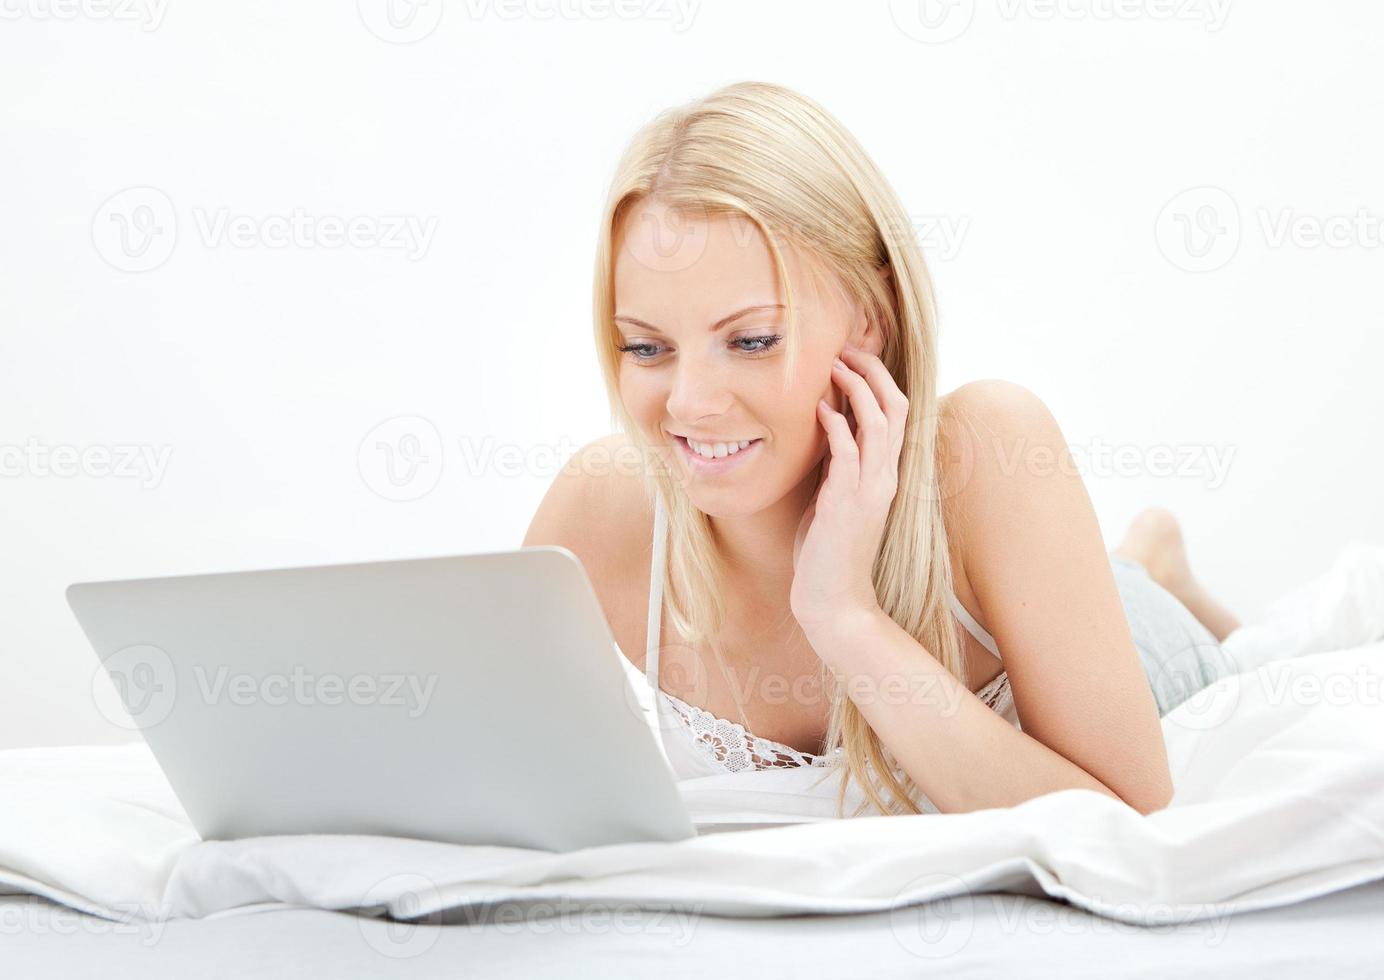 jovem mulher bonita usando o laptop na cama foto